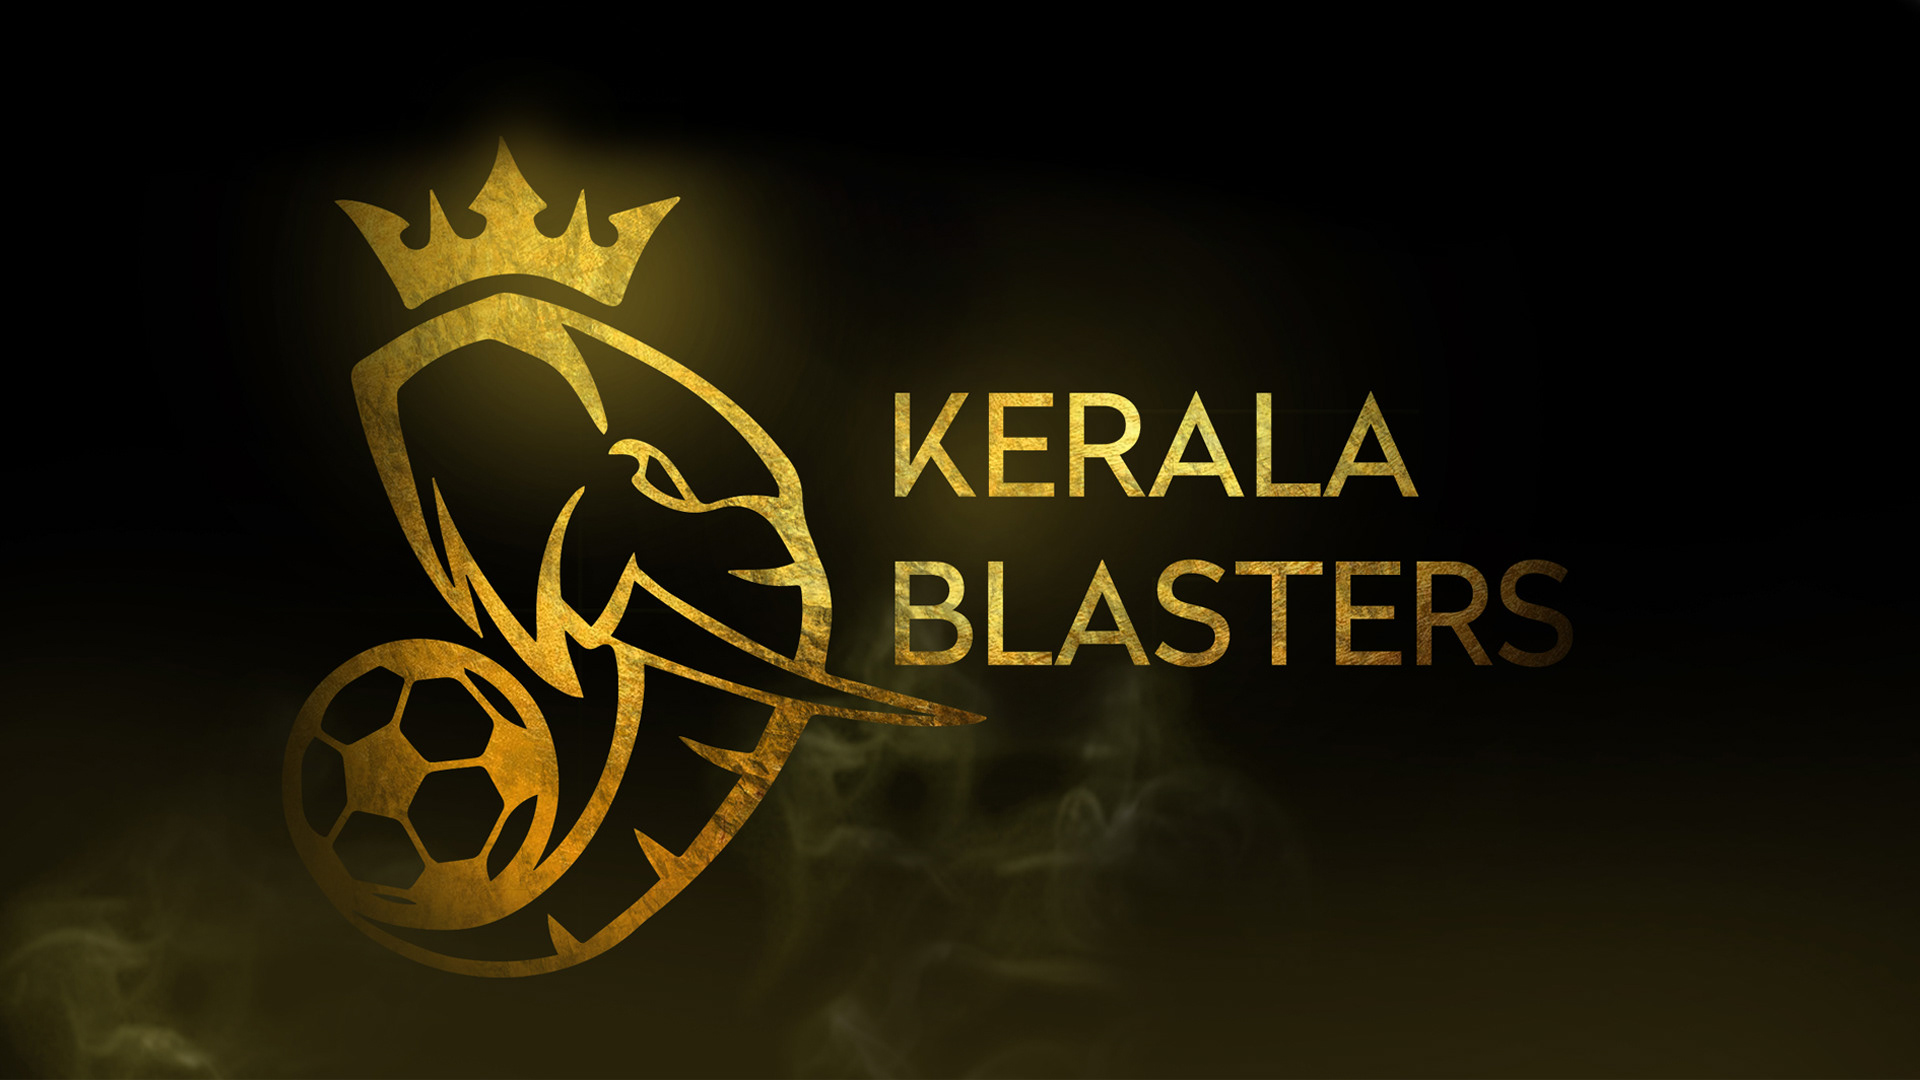 Kerala blasters fc